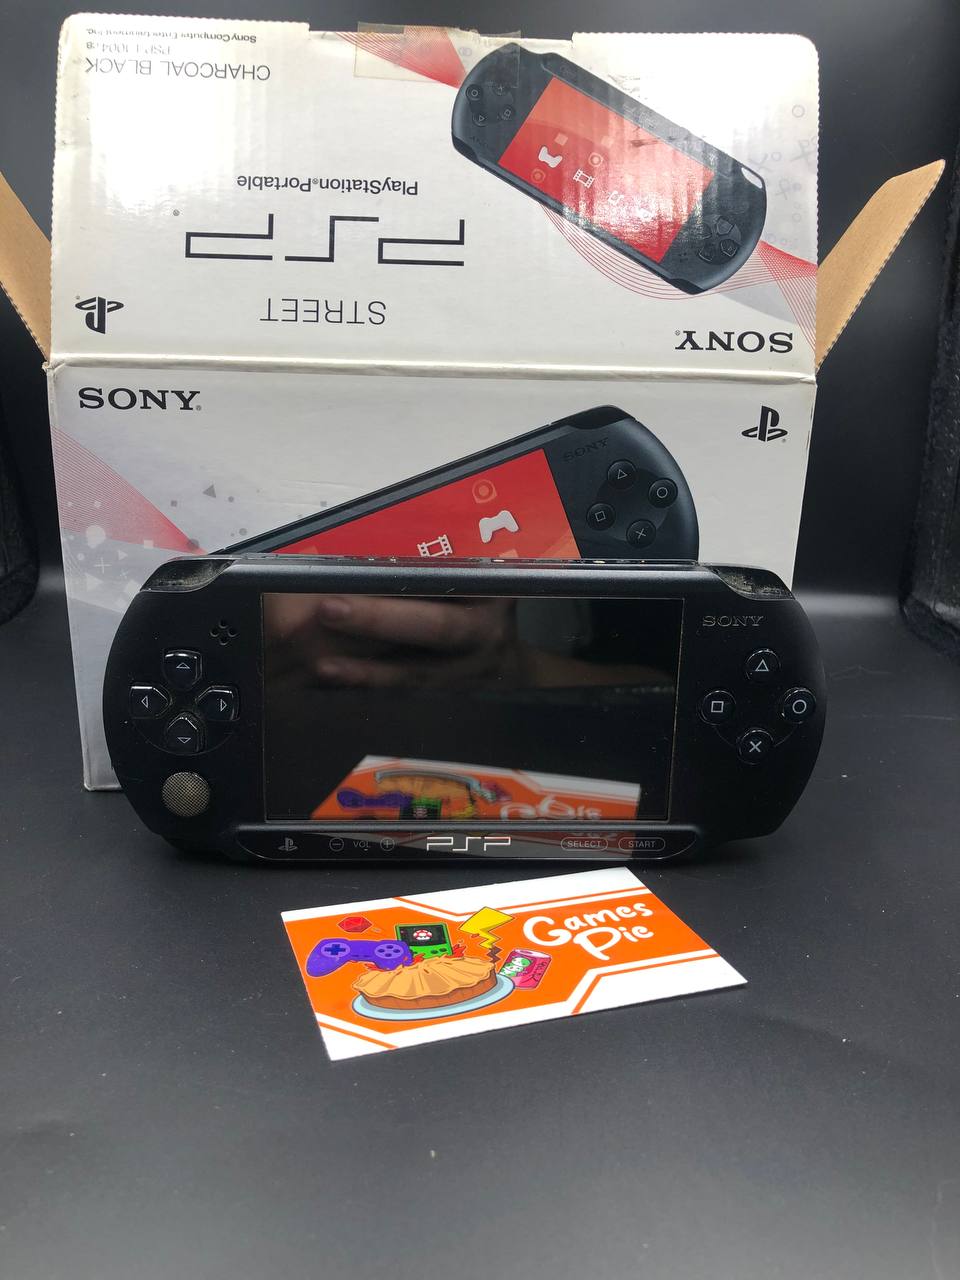 Sony PSP Street E1004, Boxata Charcoal Black con Memory Stick 1GB